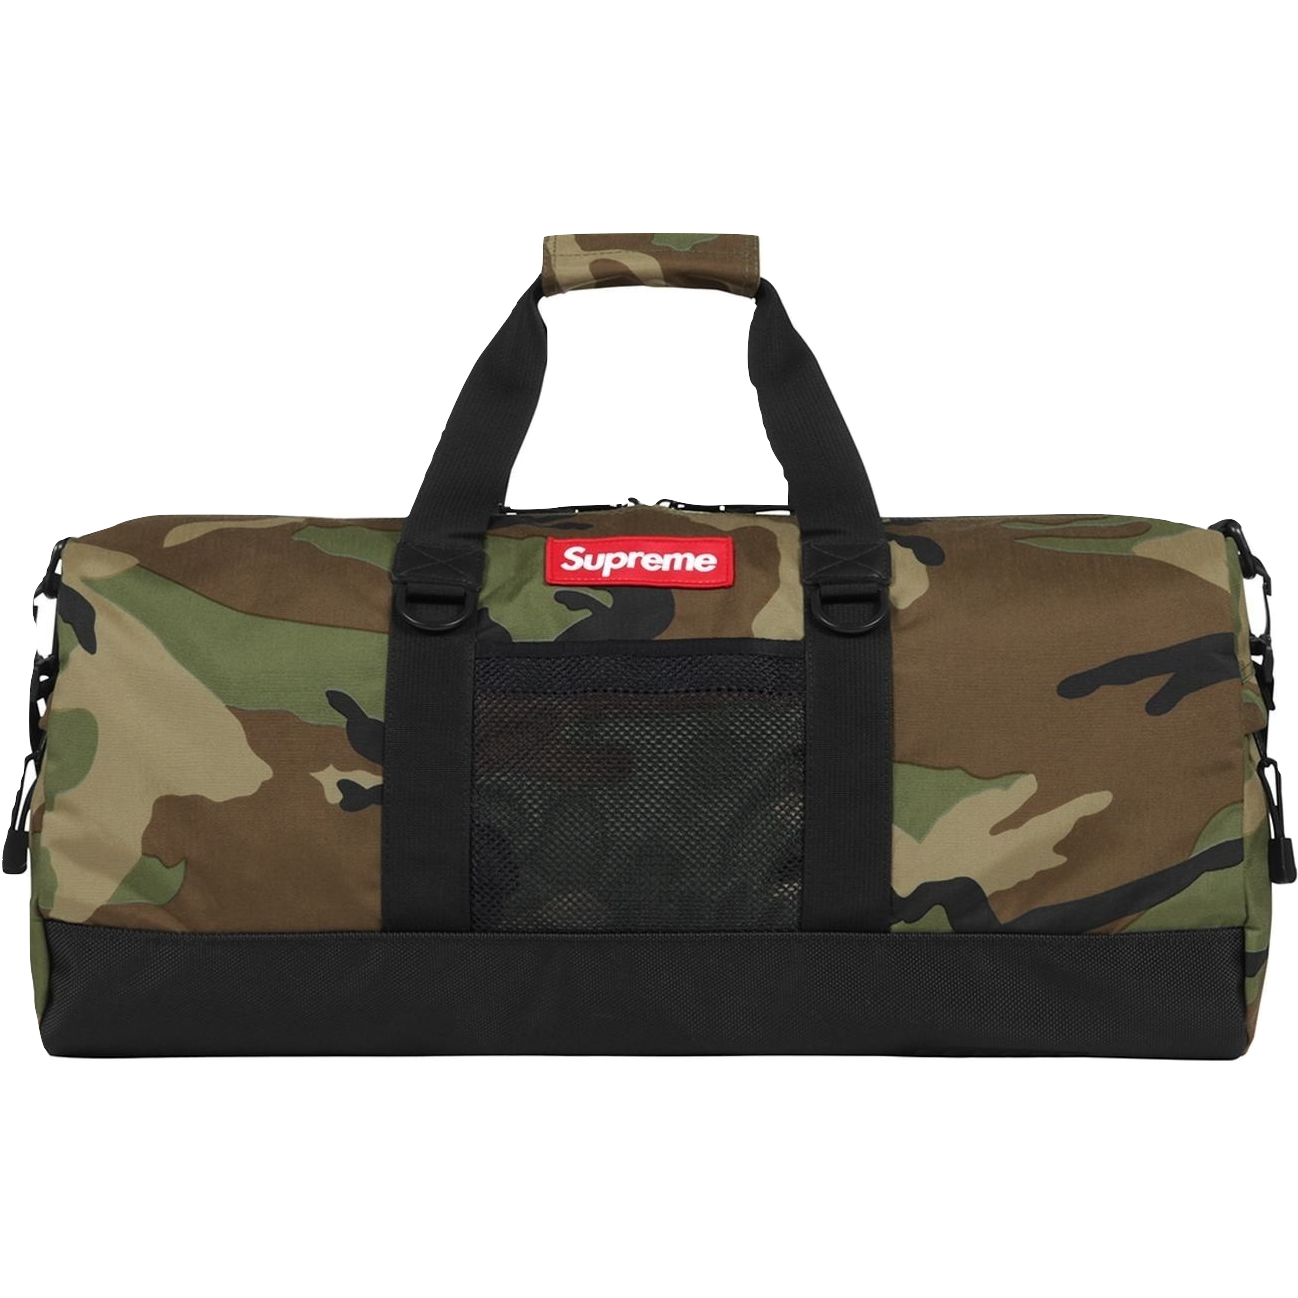 Supreme Contour Duffle Bag Woodland - Camo - Used FW15